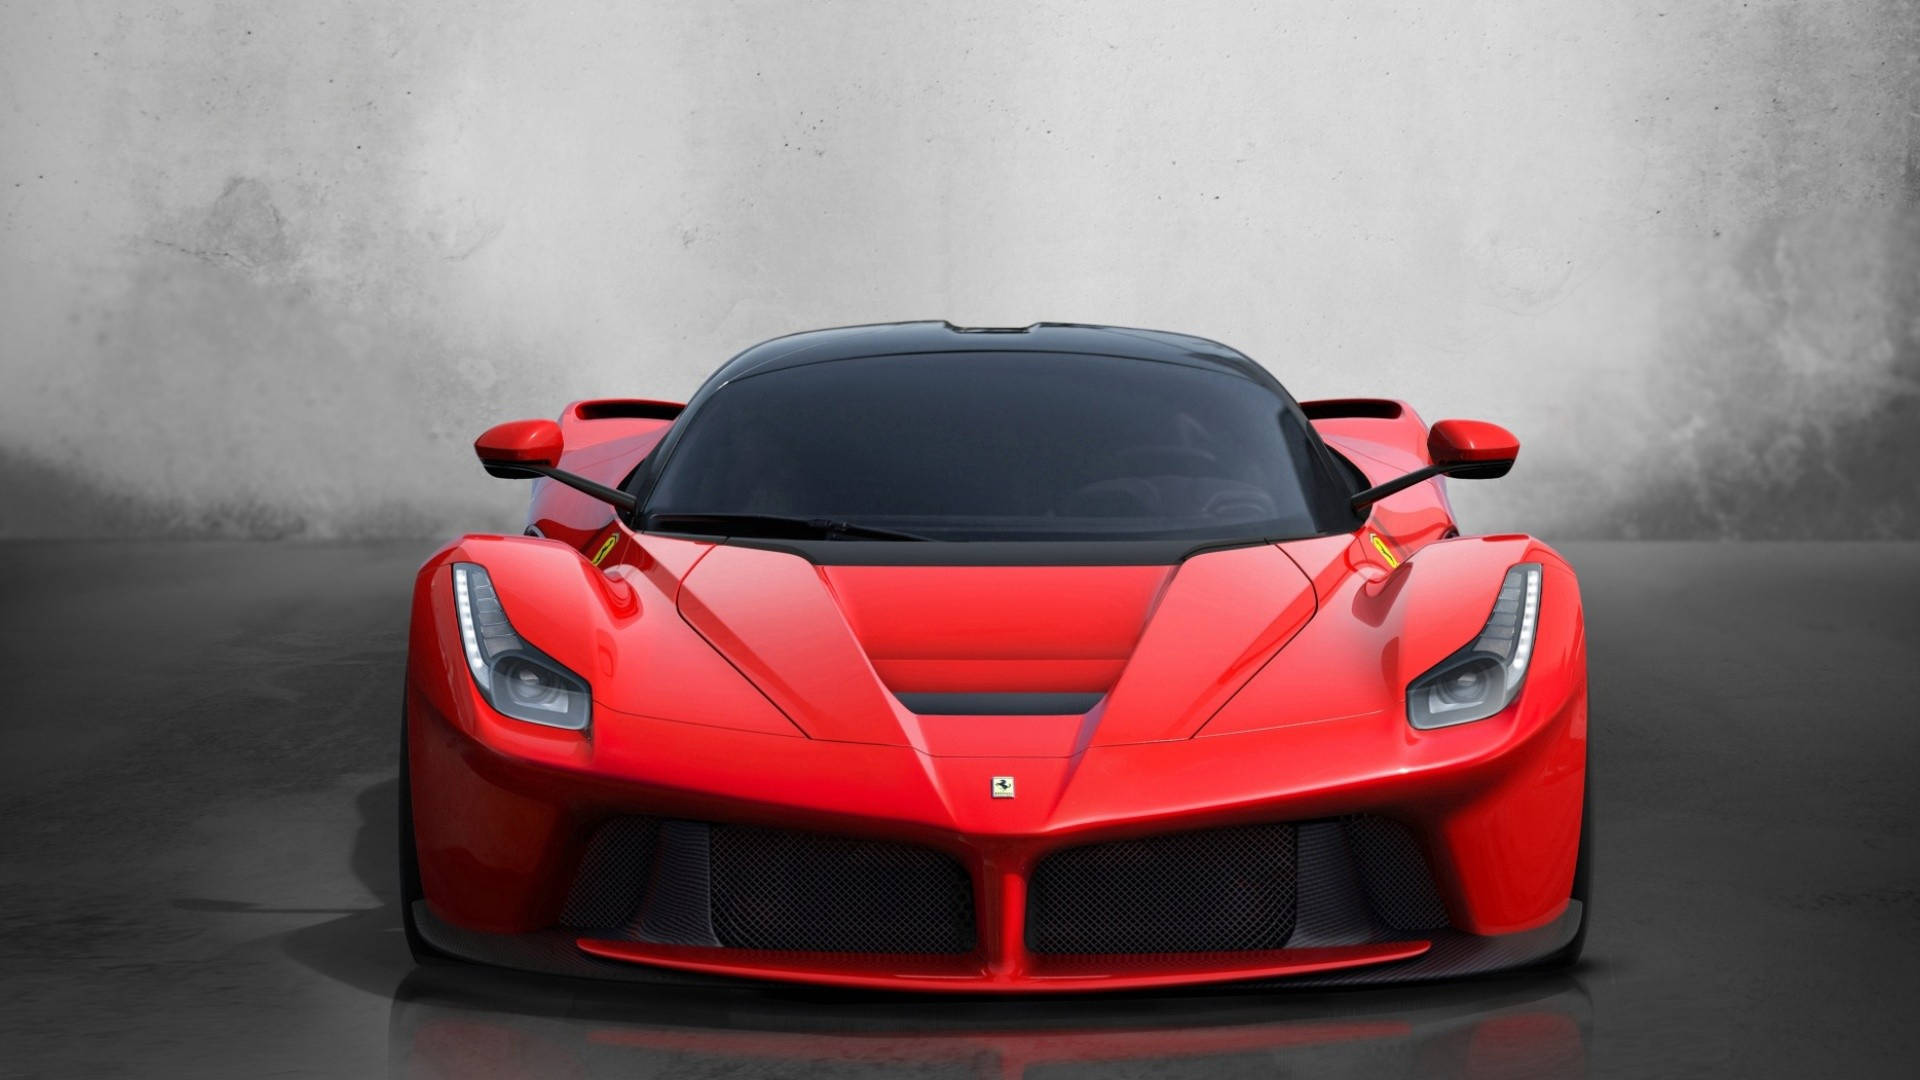 The Luxury Red Ferrari Wallpaper